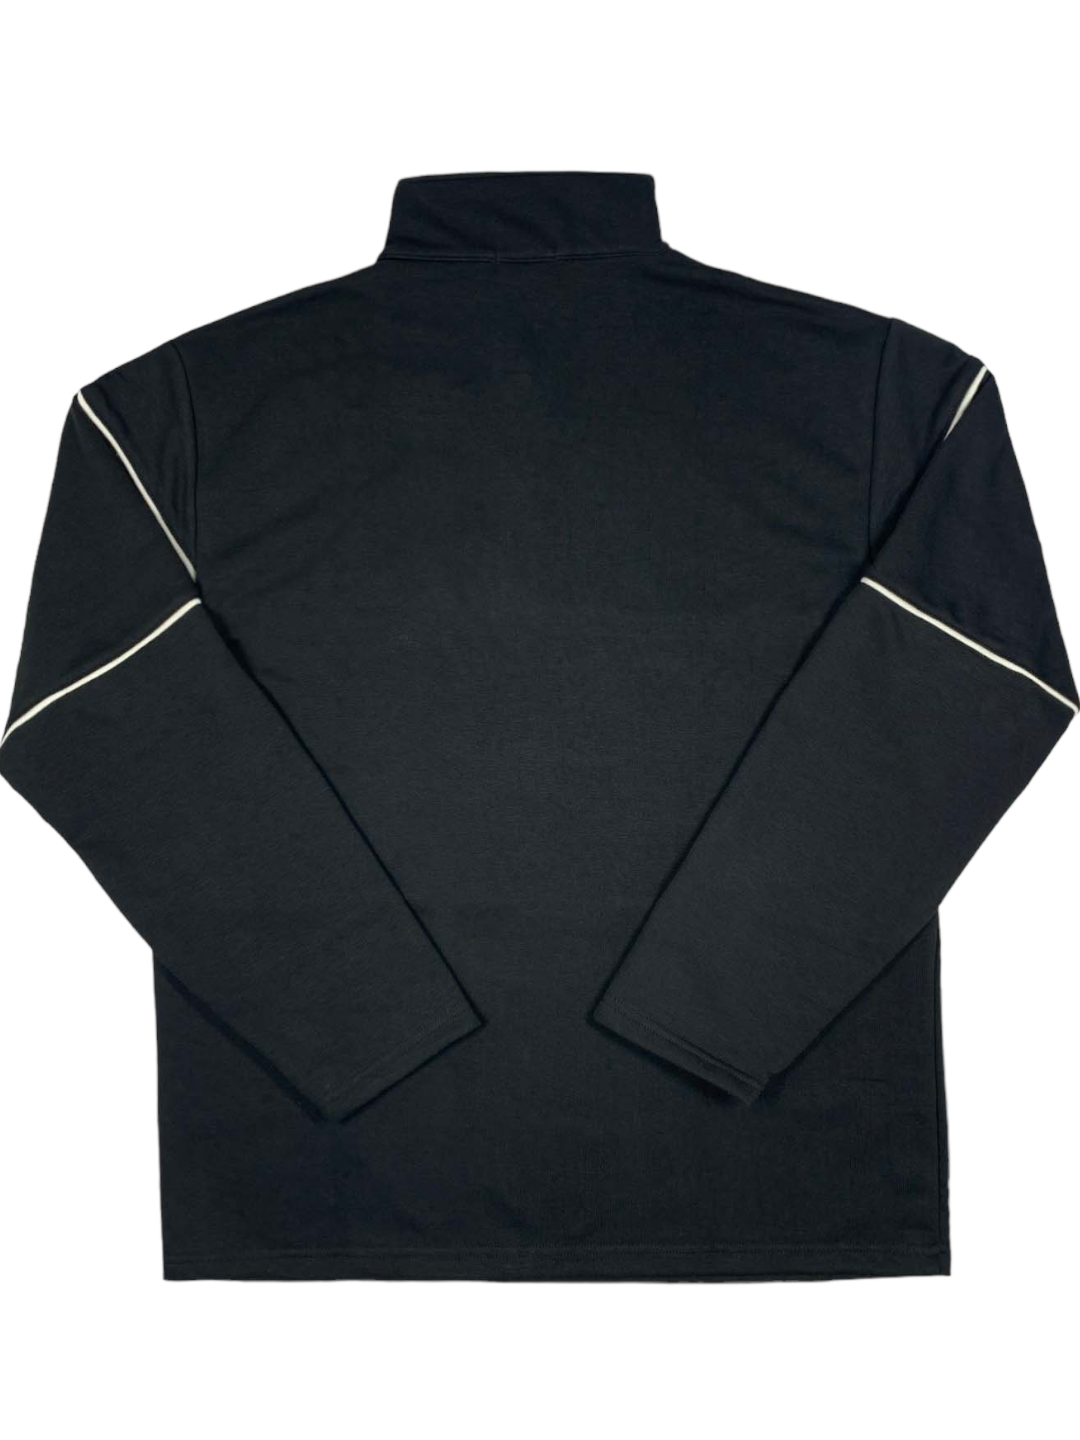 FRANK GARCON Jack Polo Sweatshirt (Black)